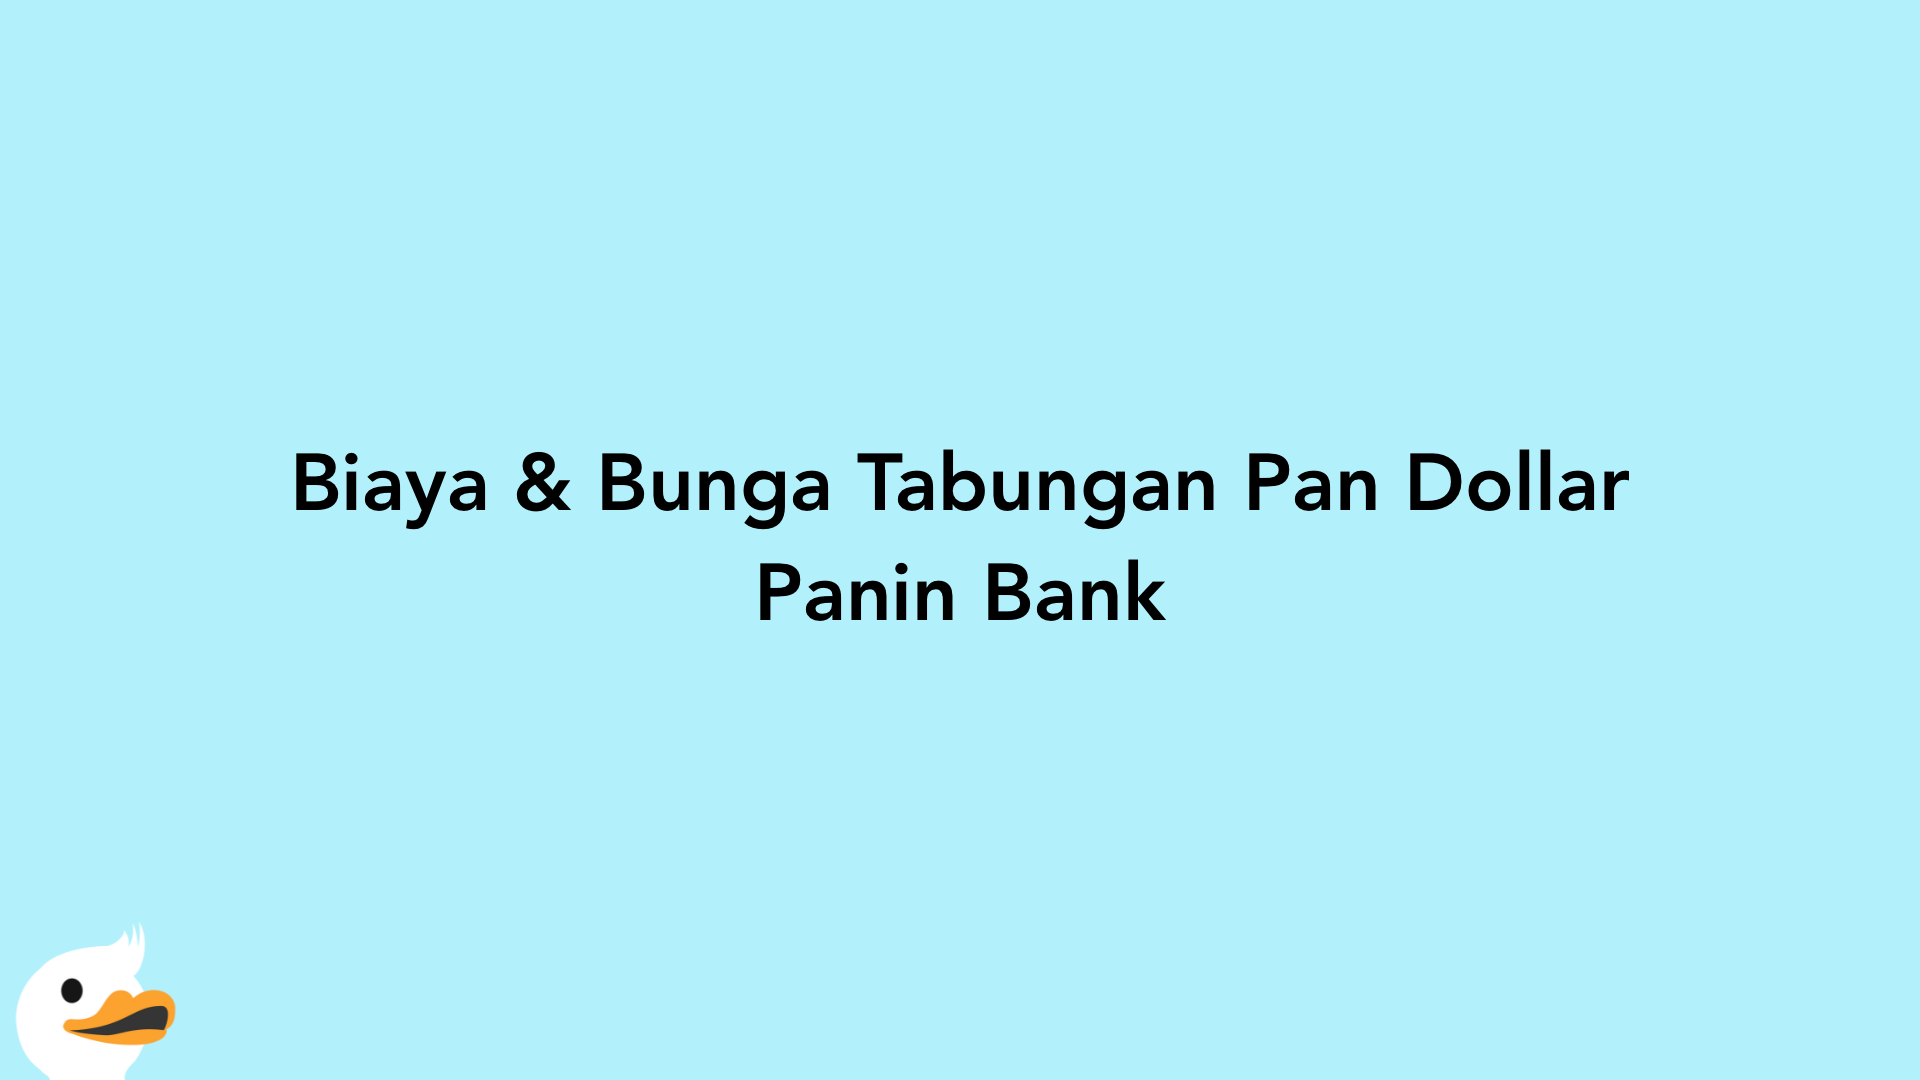 Biaya & Bunga Tabungan Pan Dollar Panin Bank